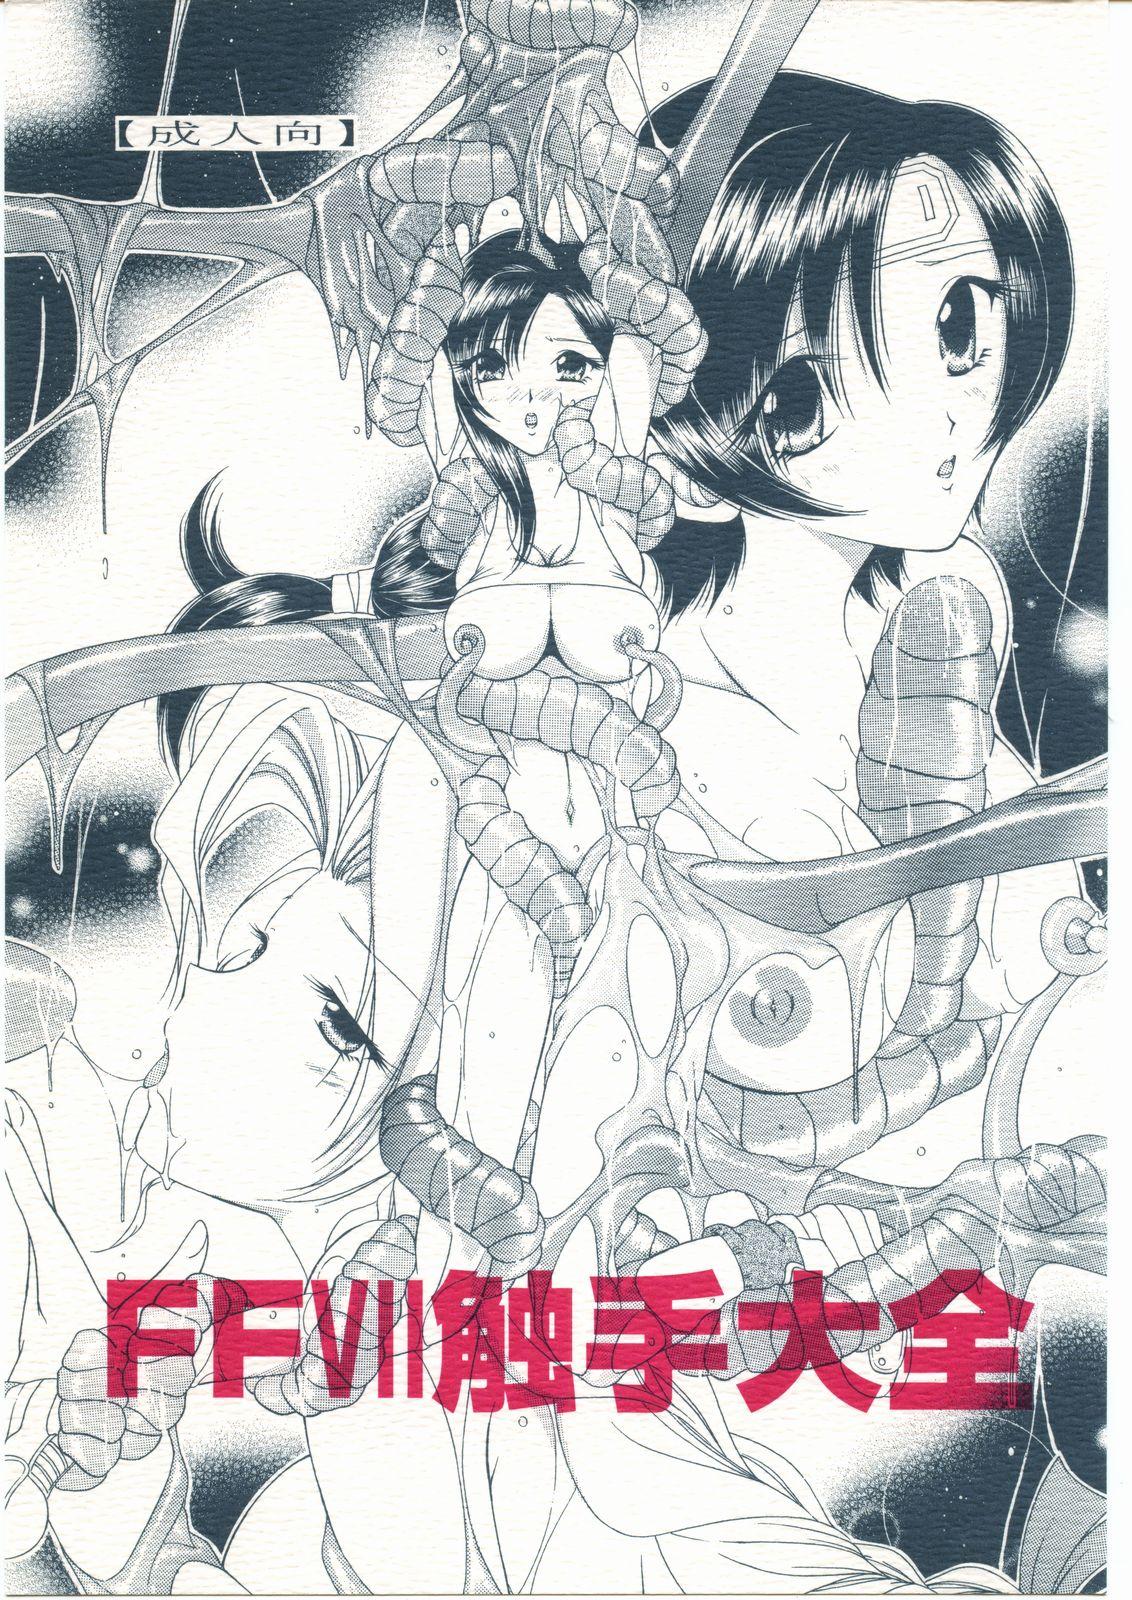 Funny FFVII Shokushu Taizen - Final fantasy vii Relax - Picture 1